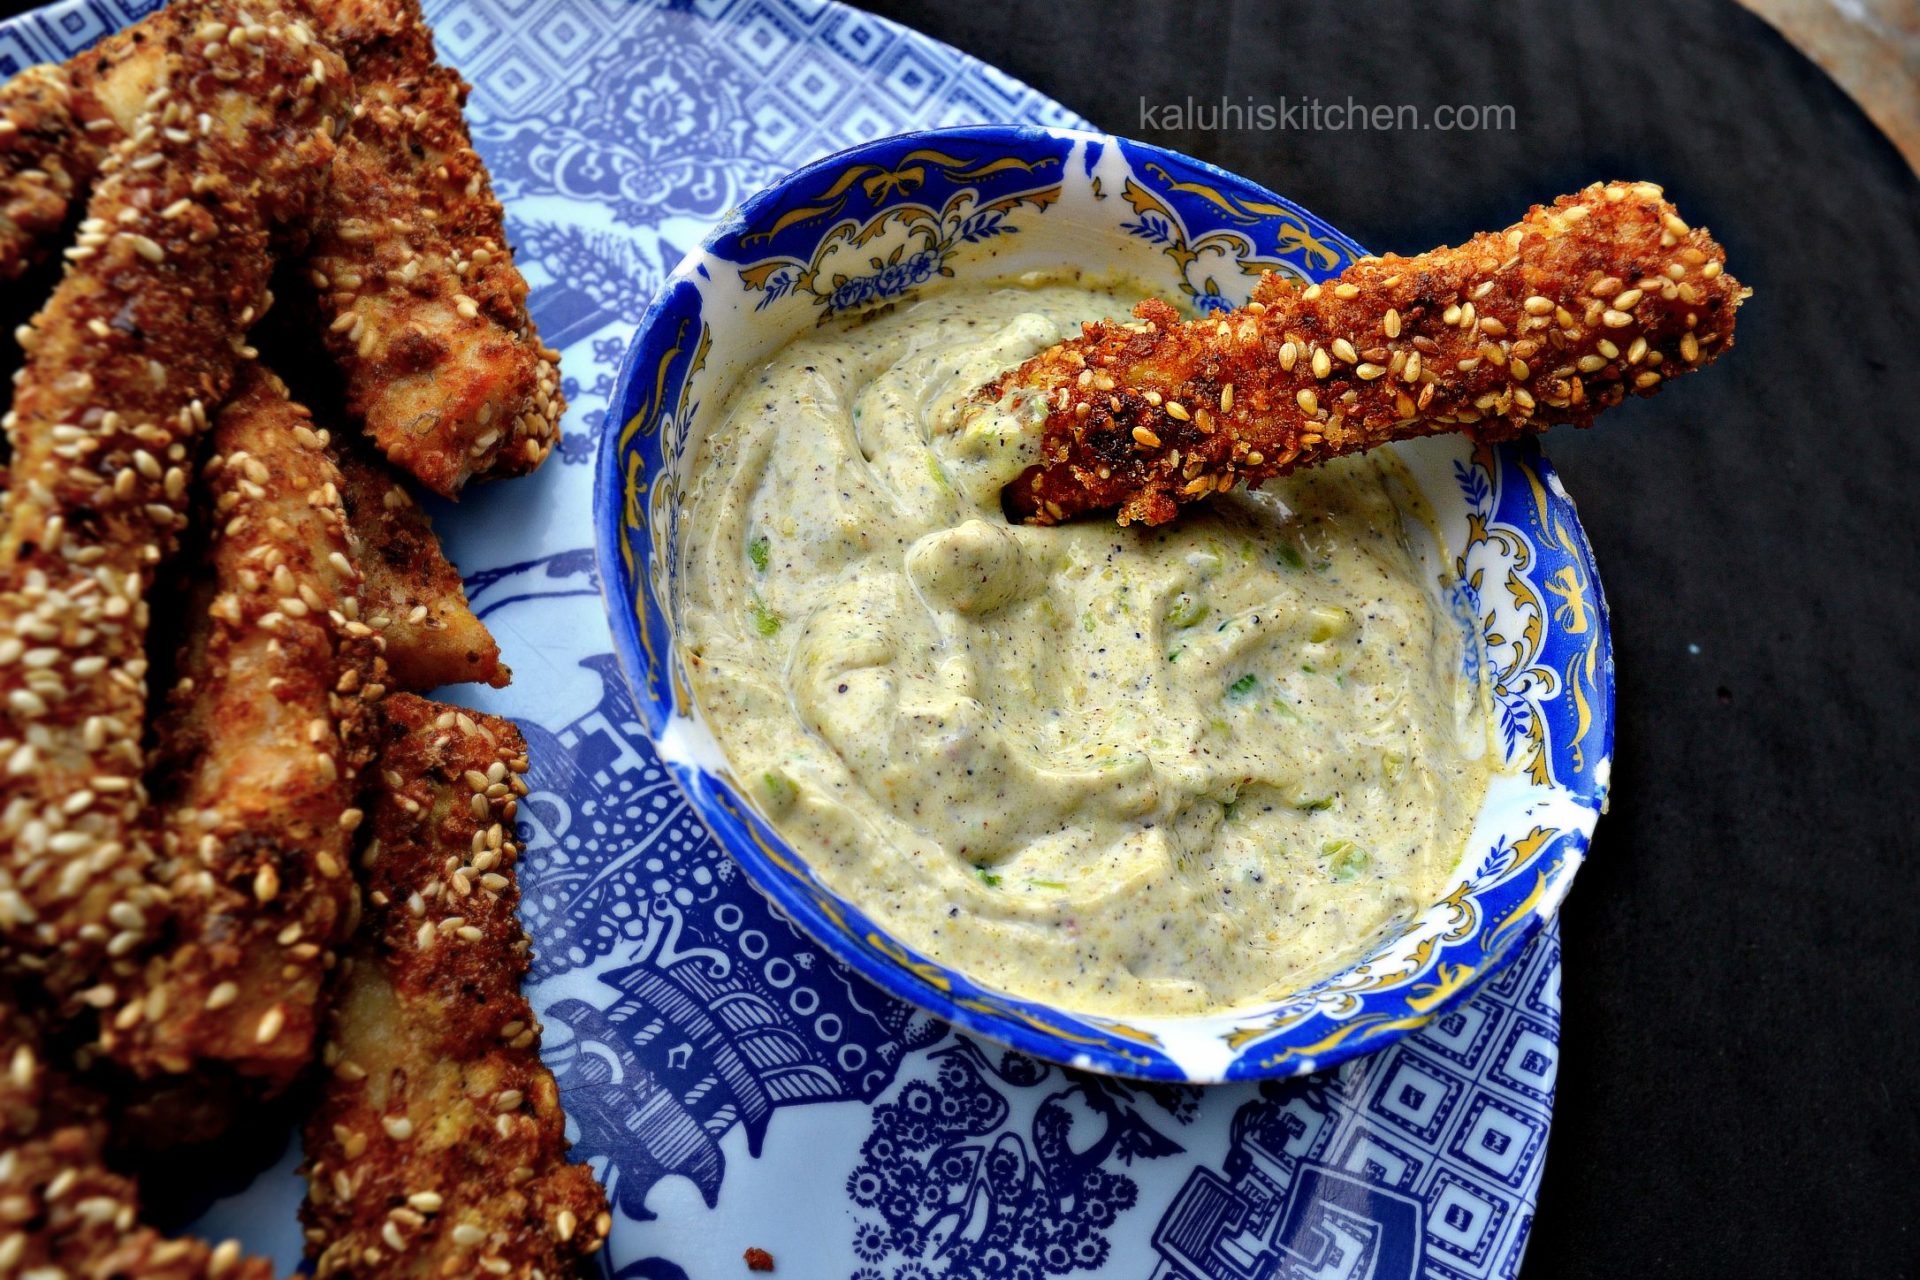 www.kaluhiskitchen.com best kenyan food blog_how to make fish fingers with tartar sauce